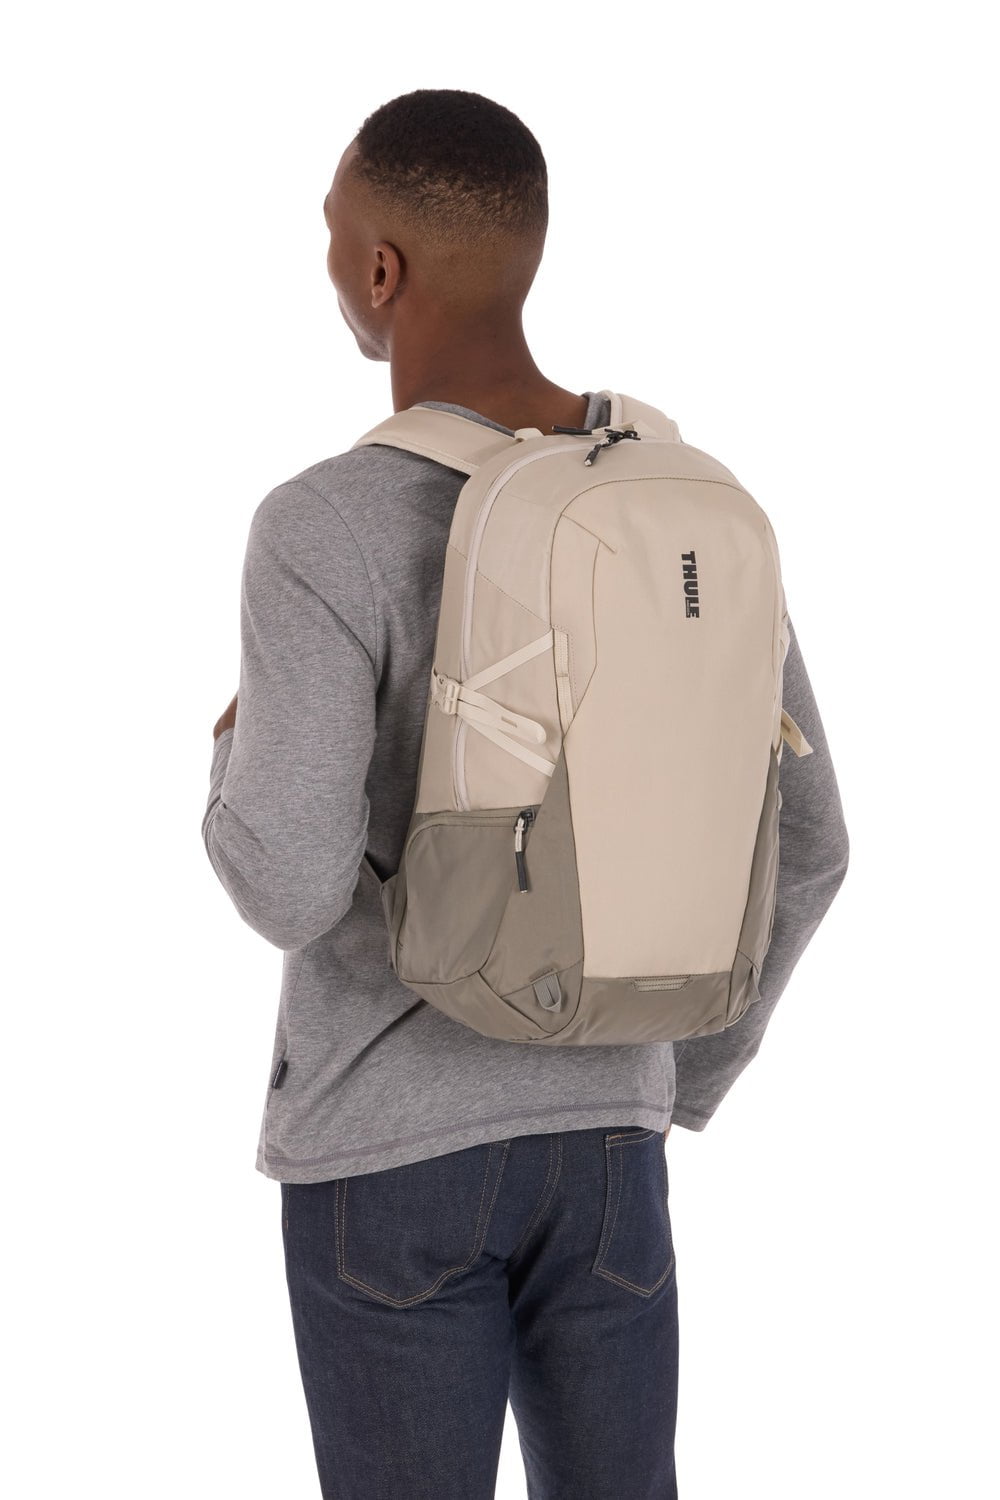 Thule EnRoute 21L Laptop Backpack - Pelican/Vetiver